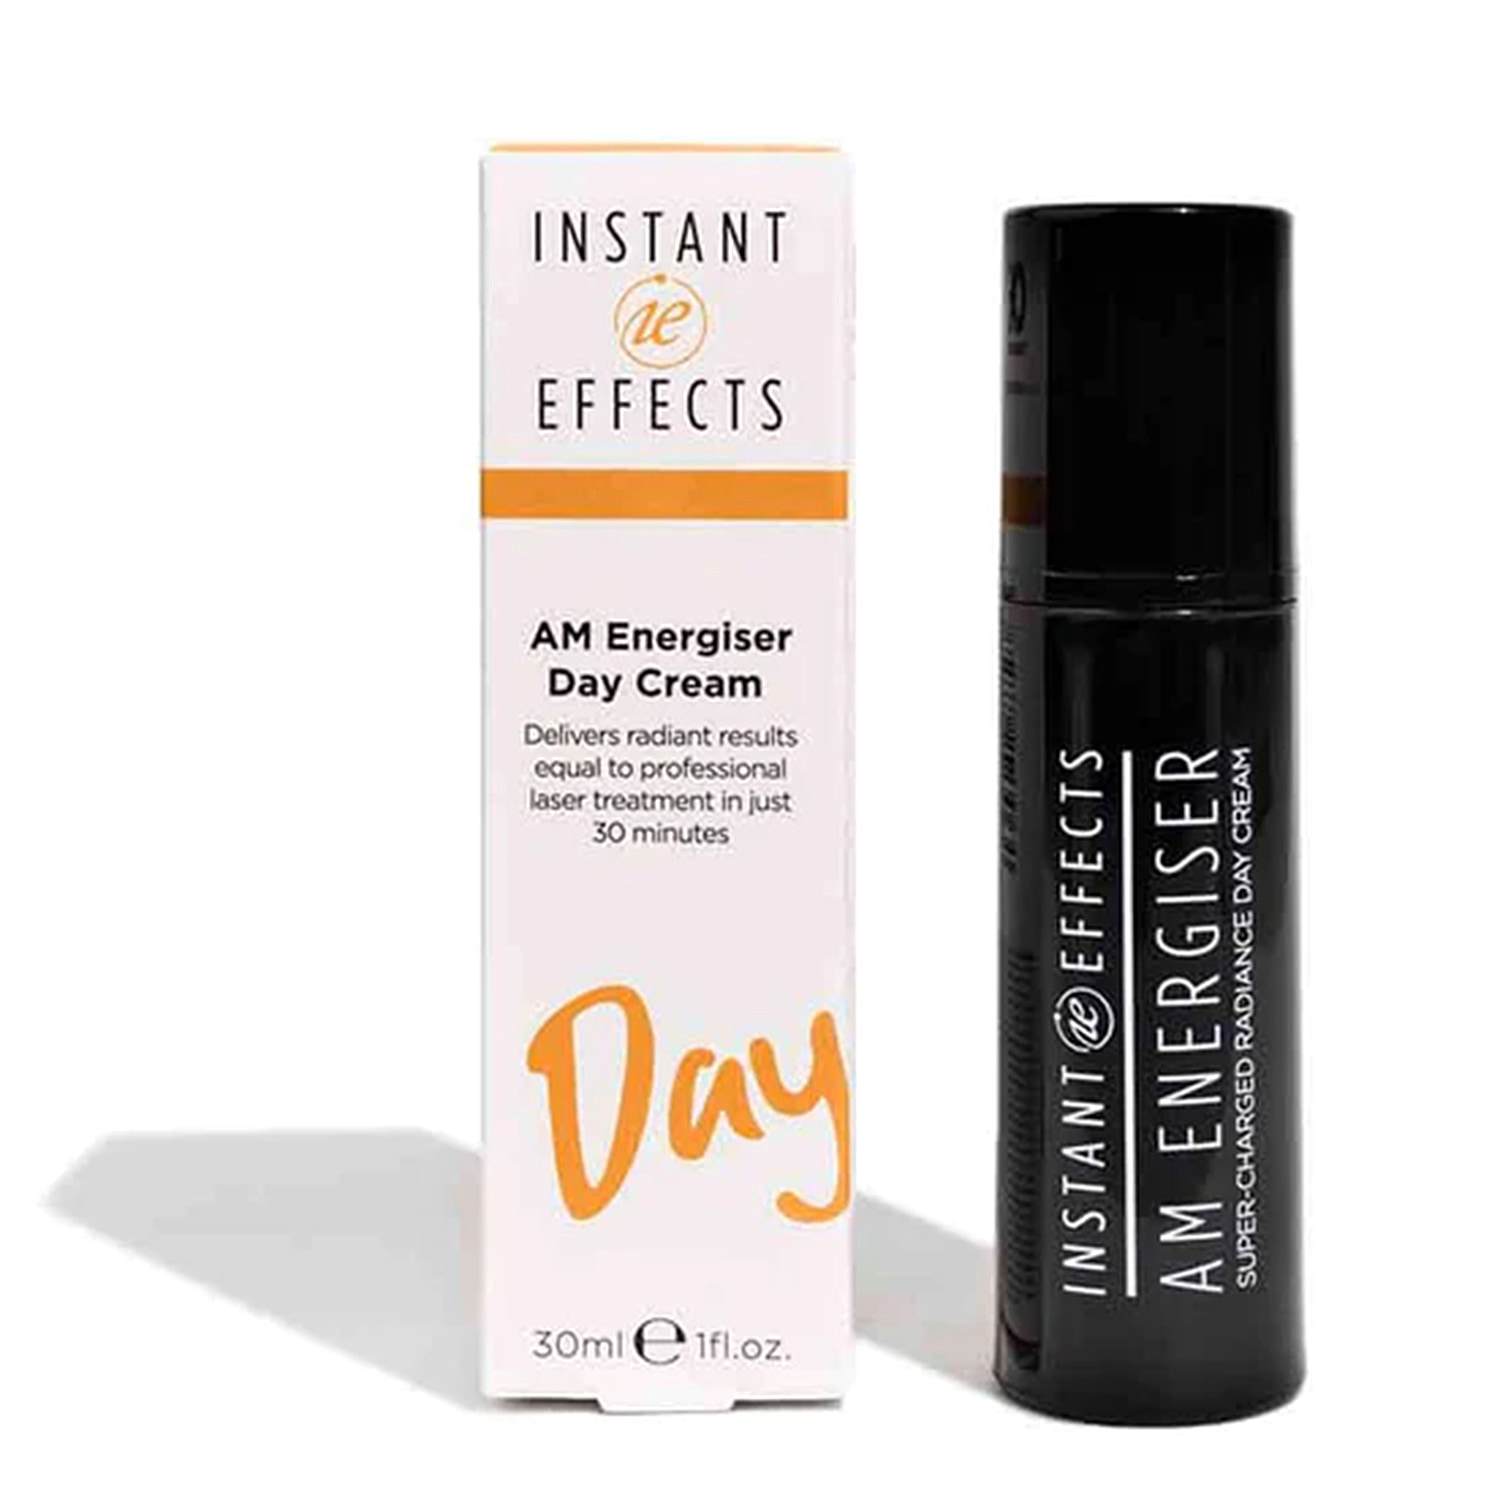 Instant Effects AM Energiser Day Cream - 30 ml